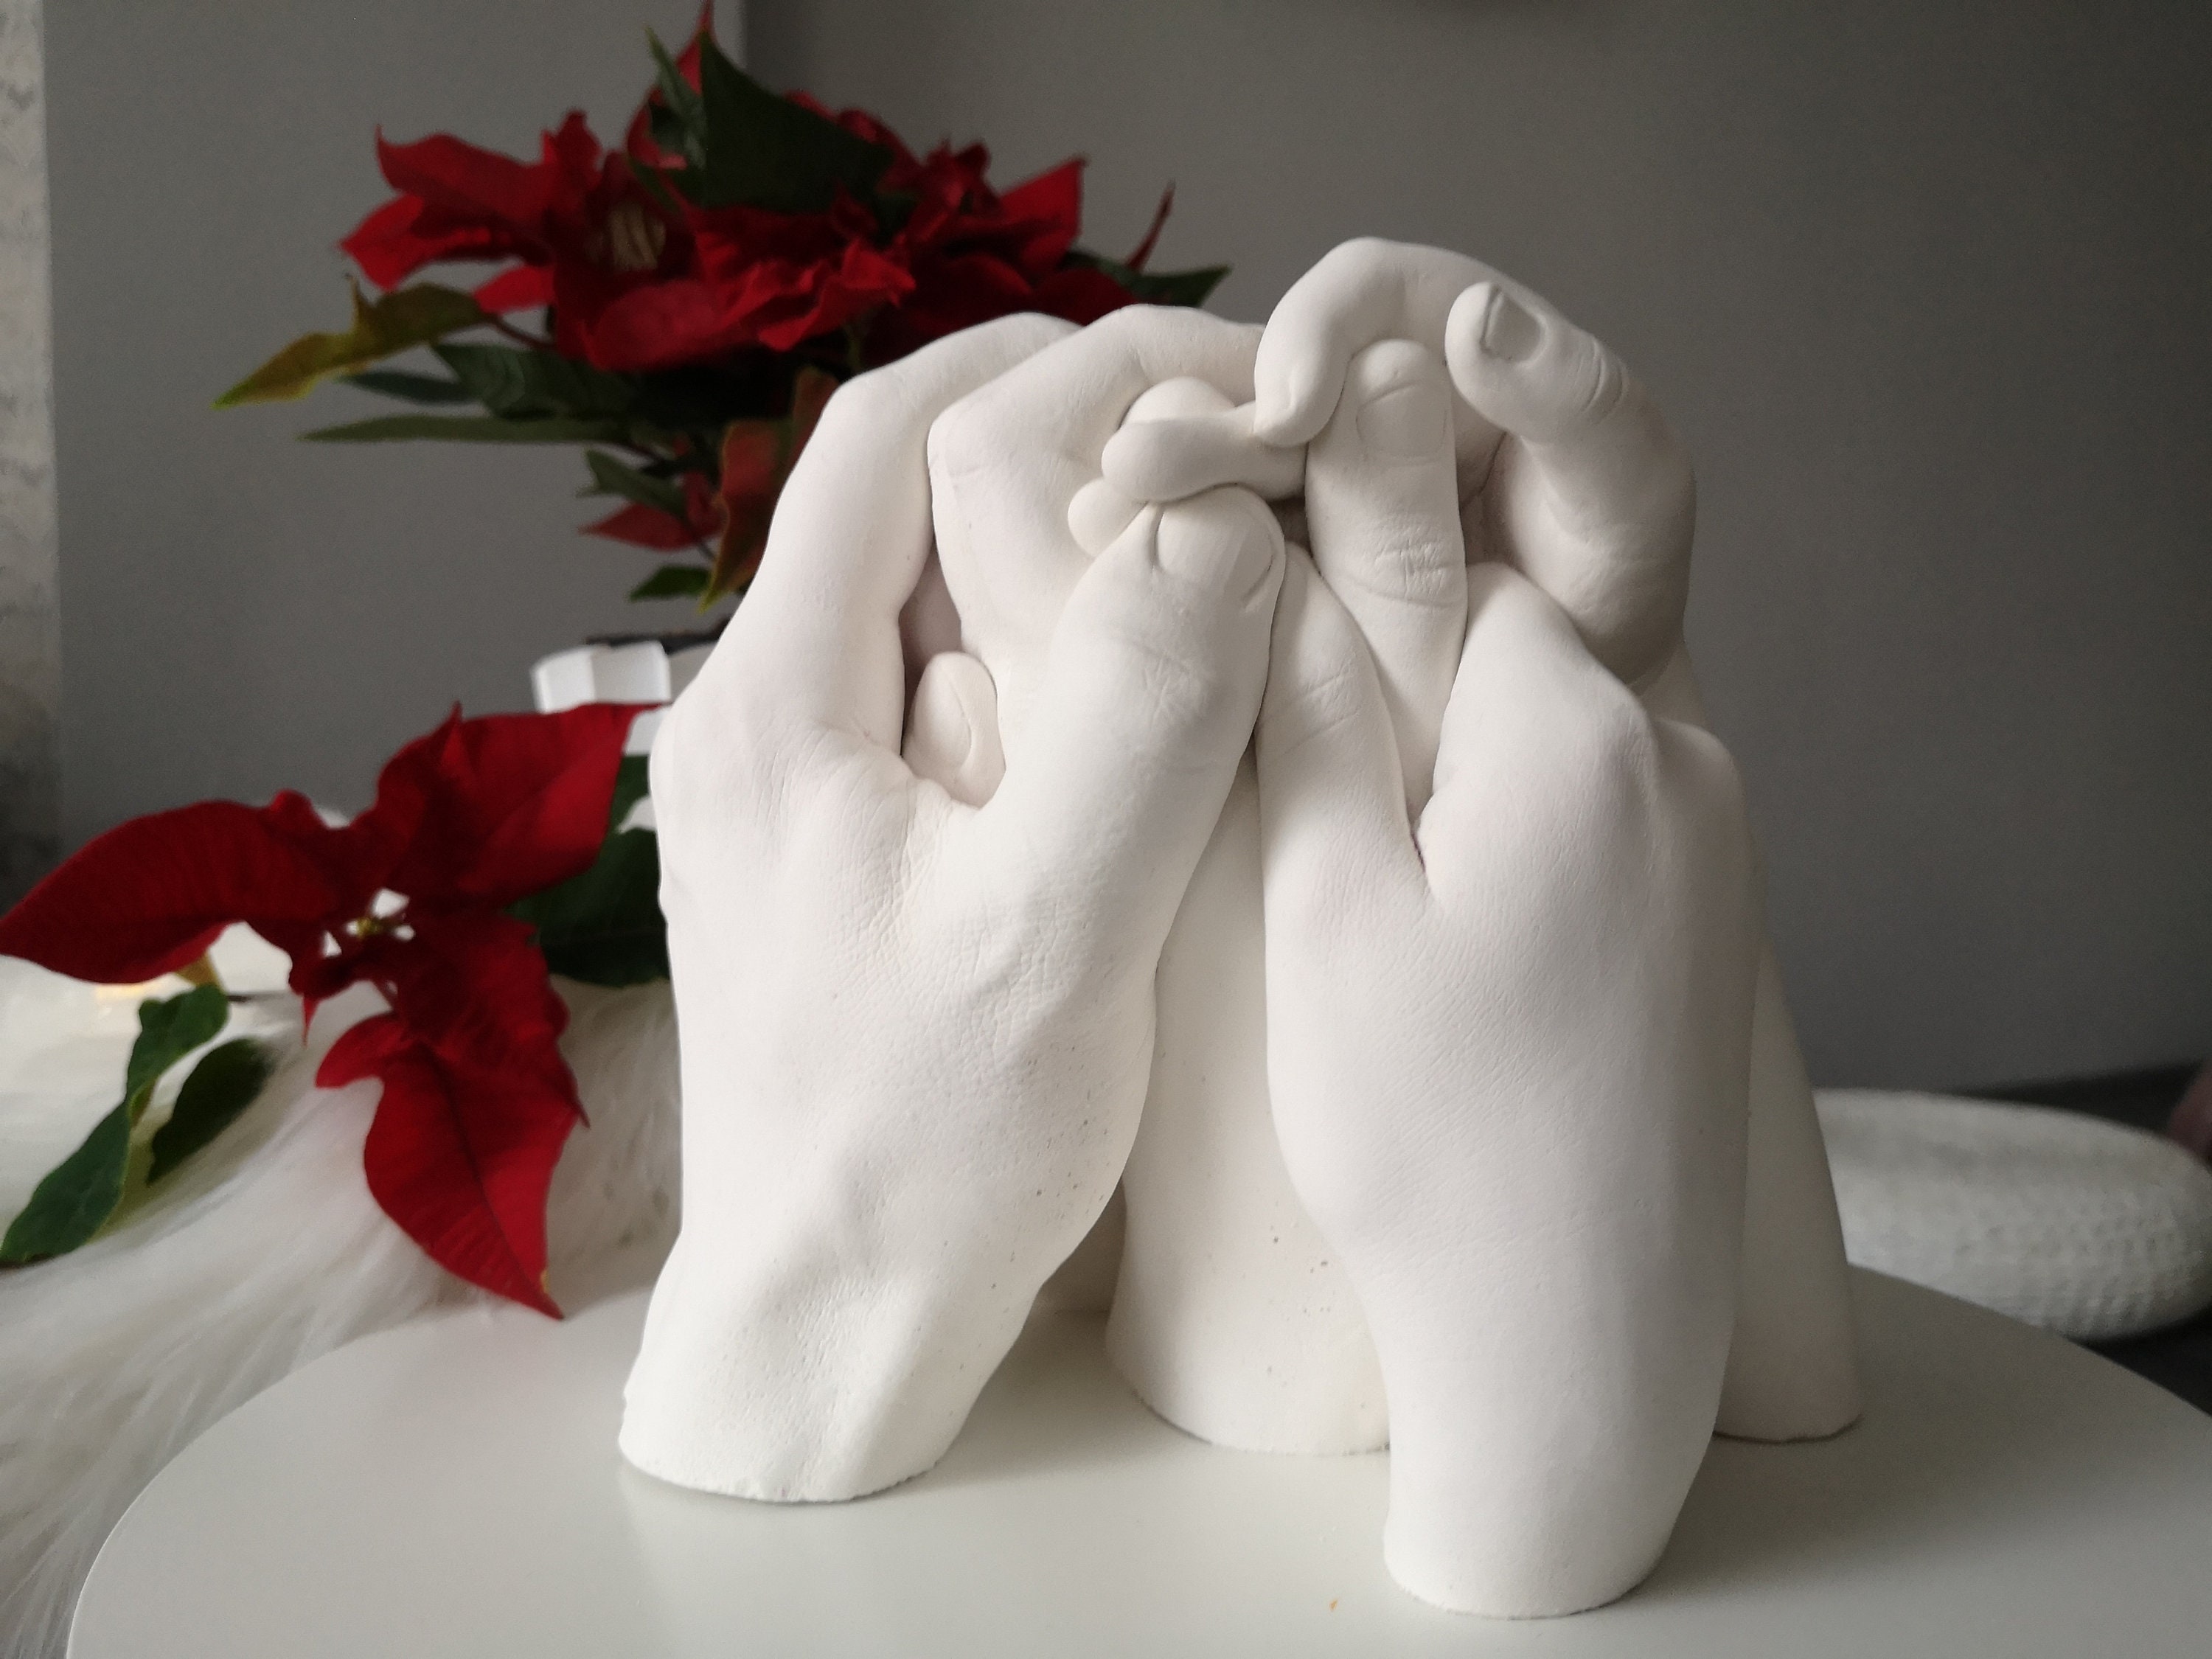 11 Family Hand Mold Ideas  hand molding, hand sculpture, families